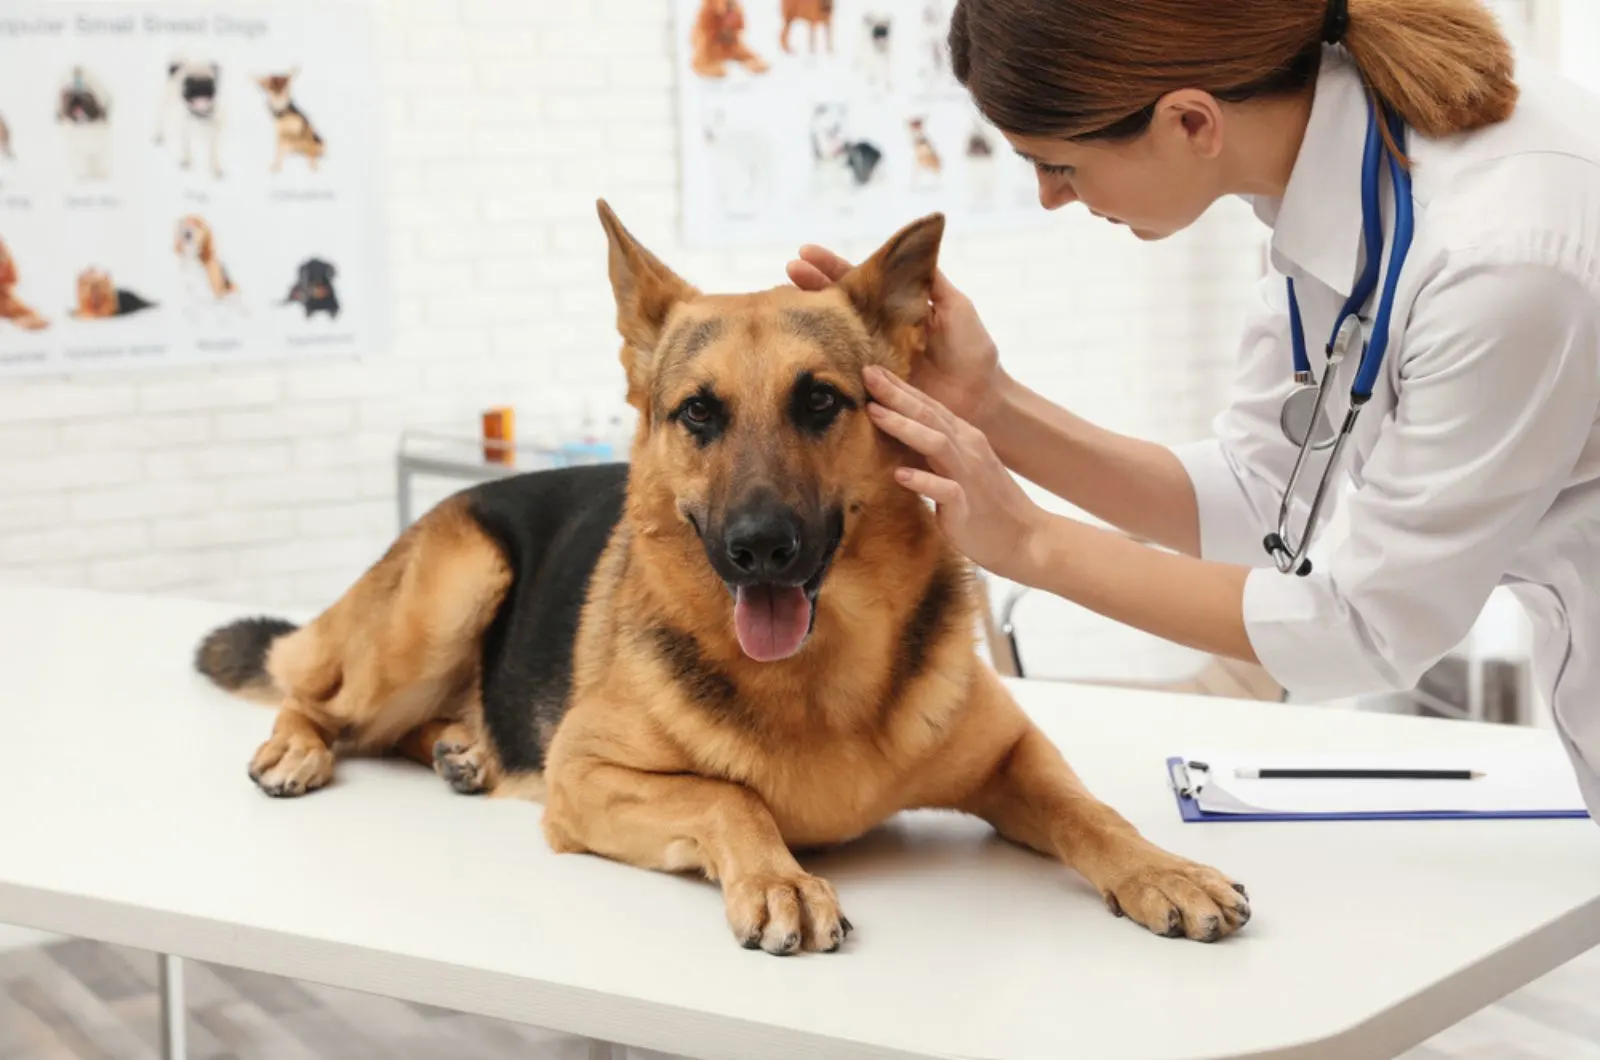 veterinarian examining dog's ears in clinic